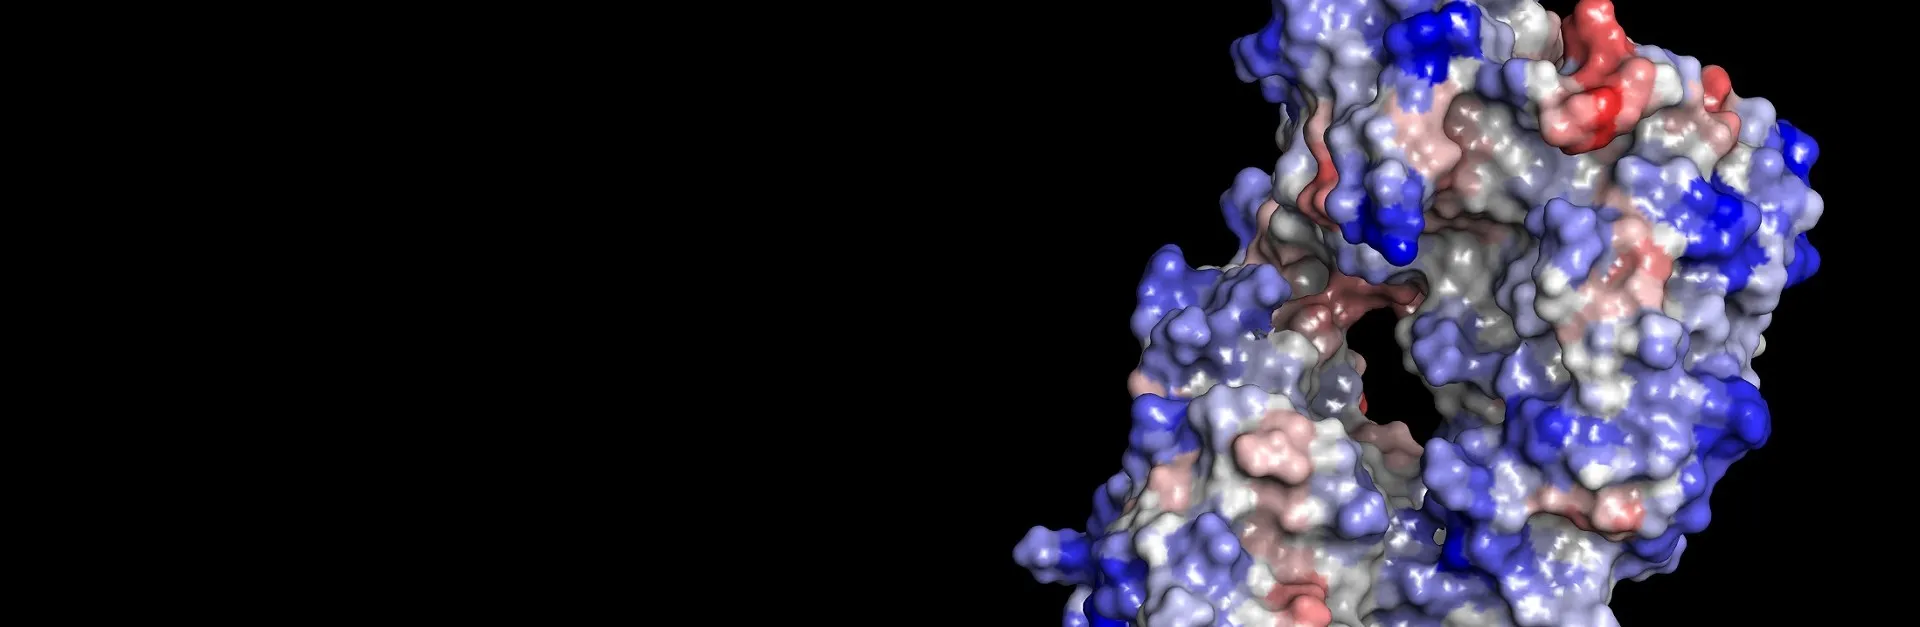 biovia discovery studio antibody modeling 1920x626.jpg